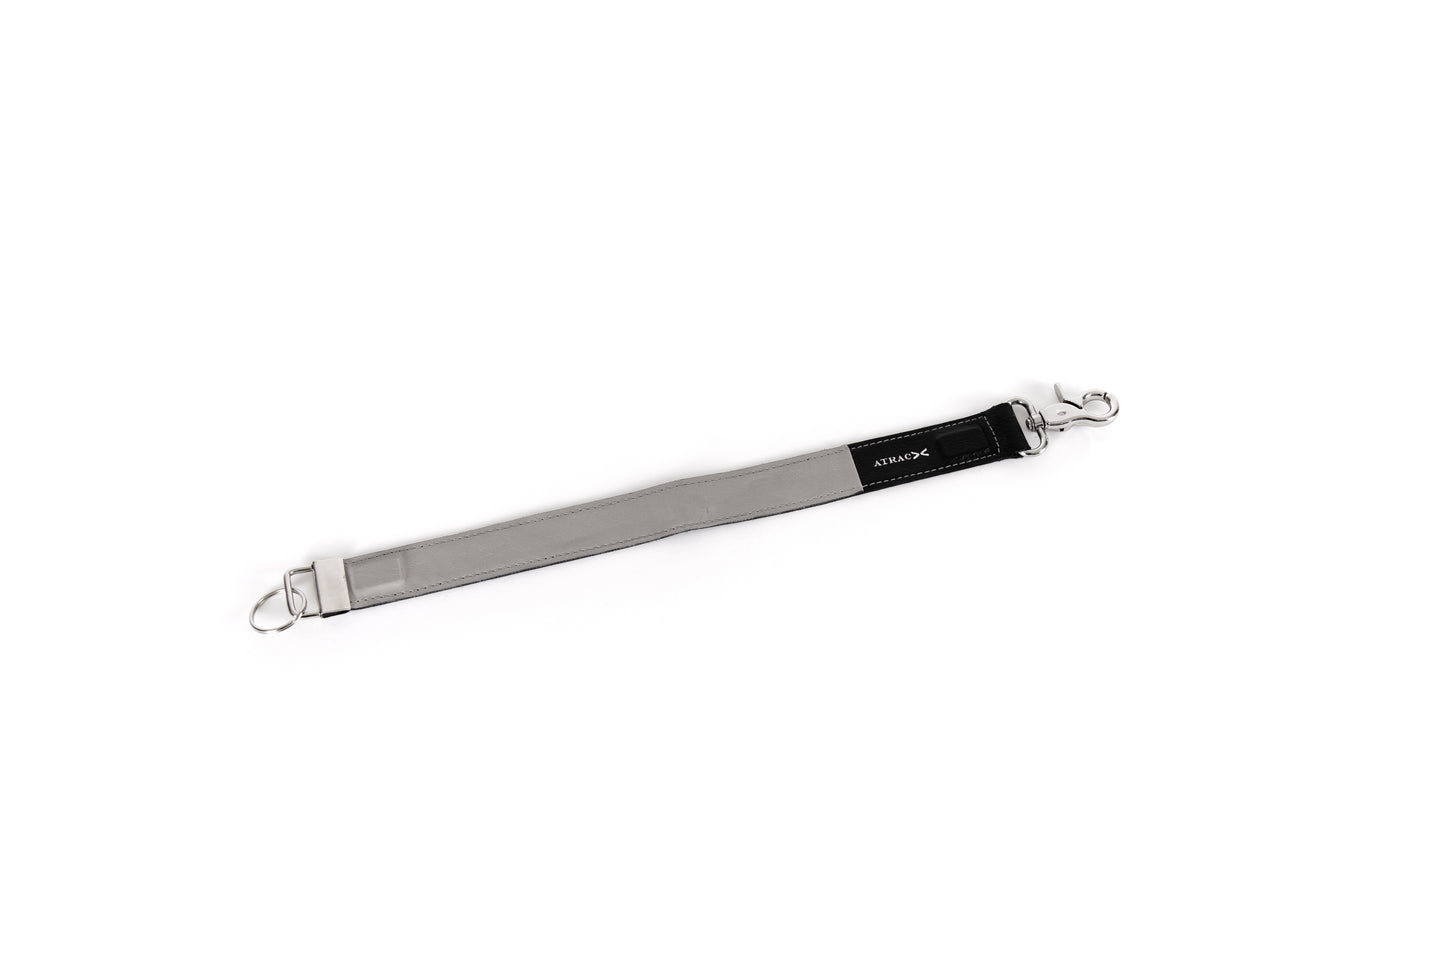 Magnetic keychain long strap | Wristlet